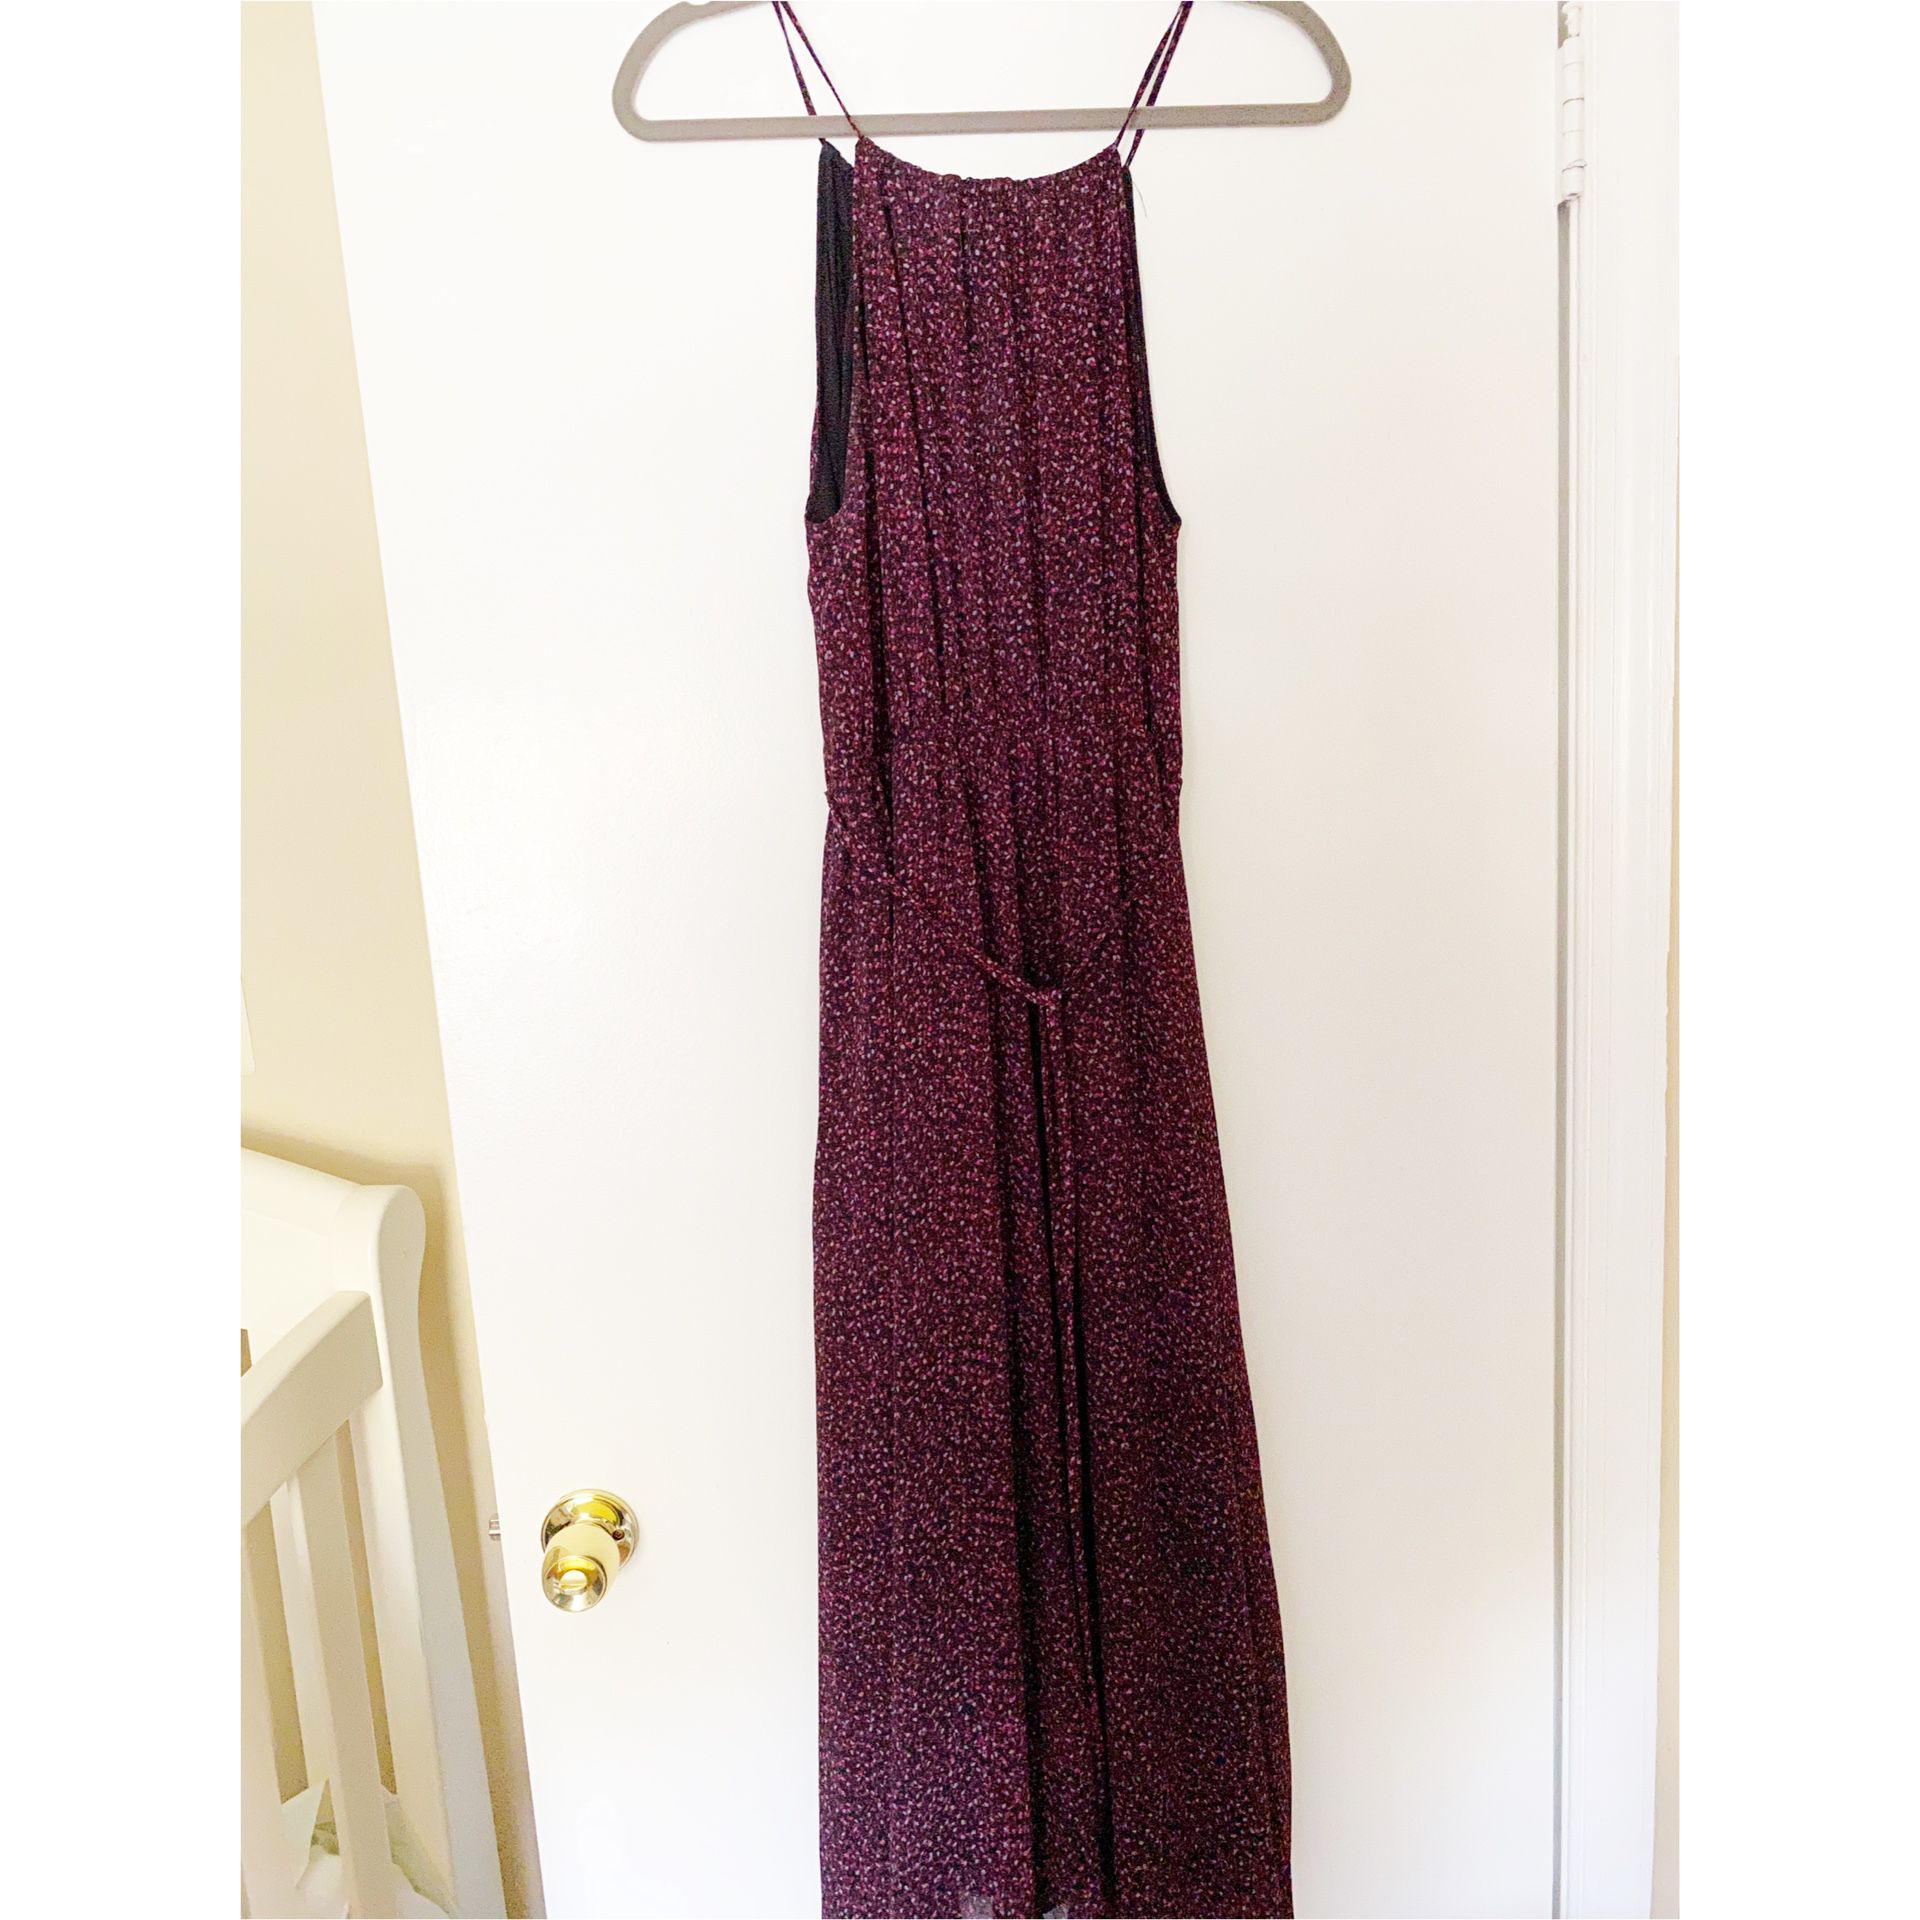 H&M purple maxi dress size XL